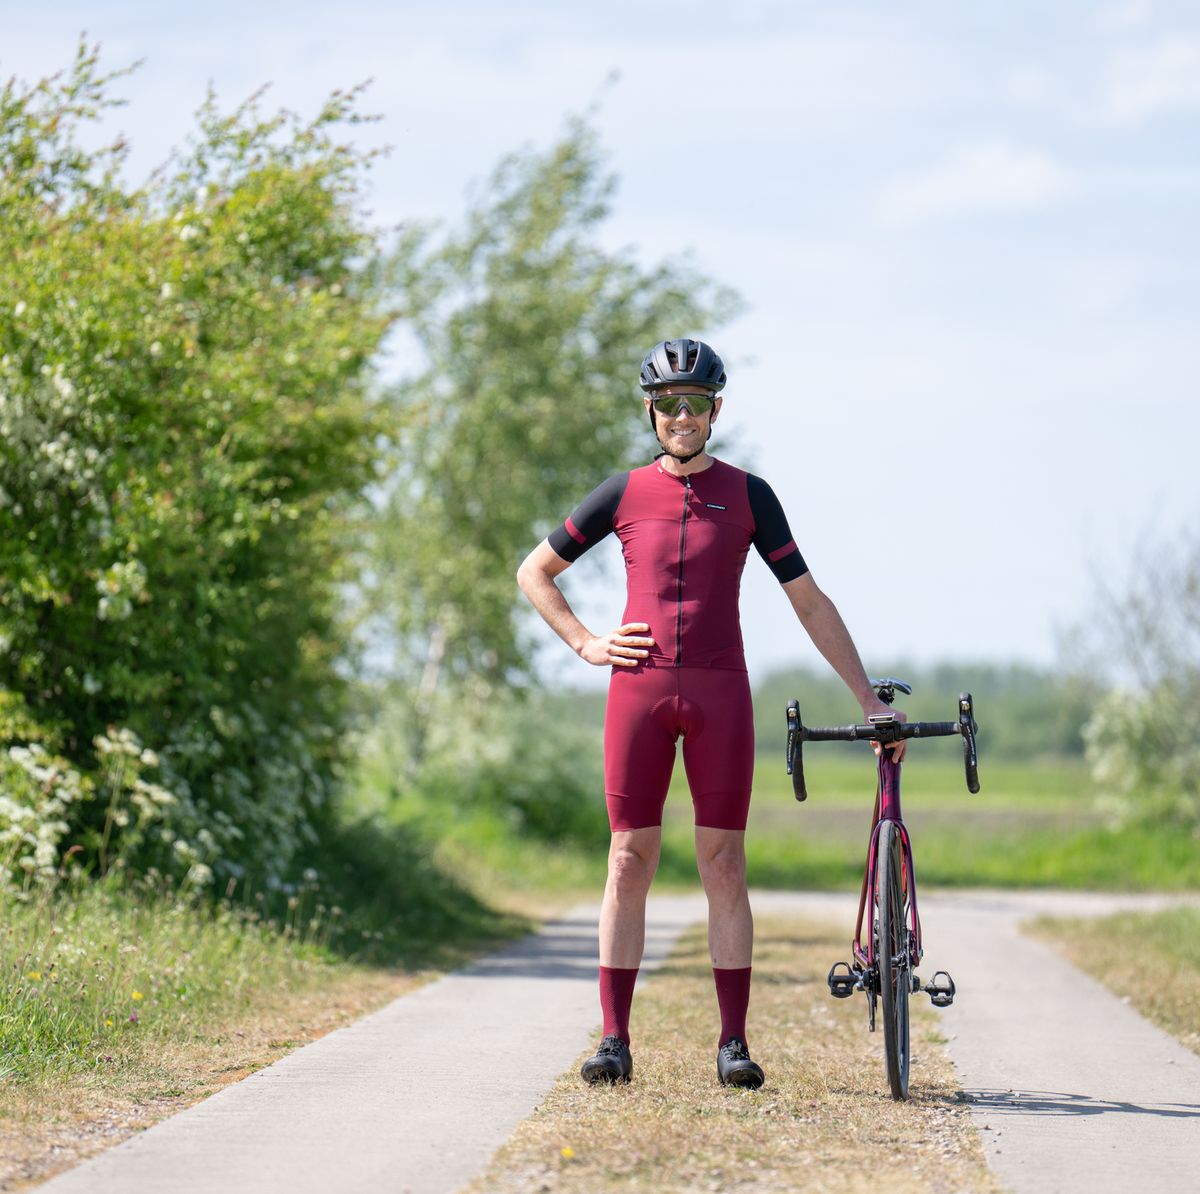 Premier klasse consumptie Review: Etxeondo Mendi fietsshirt en Orhi fietsbroek